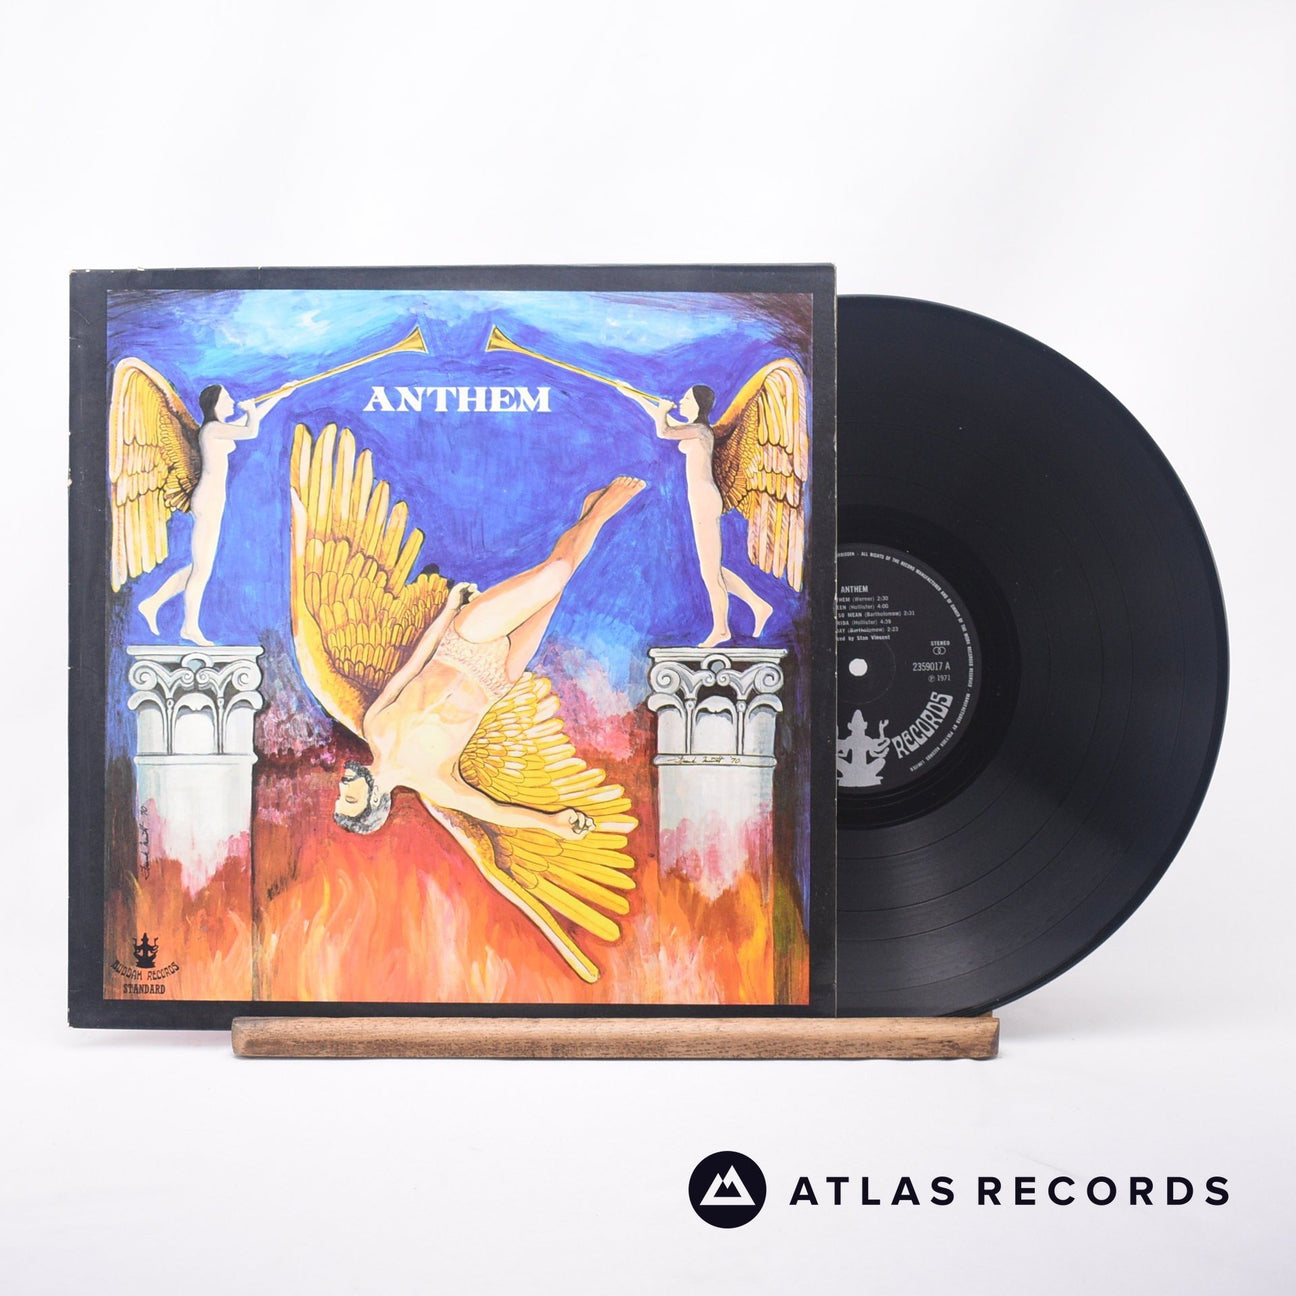 Anthem Anthem LP Vinyl Record - Front Cover & Record